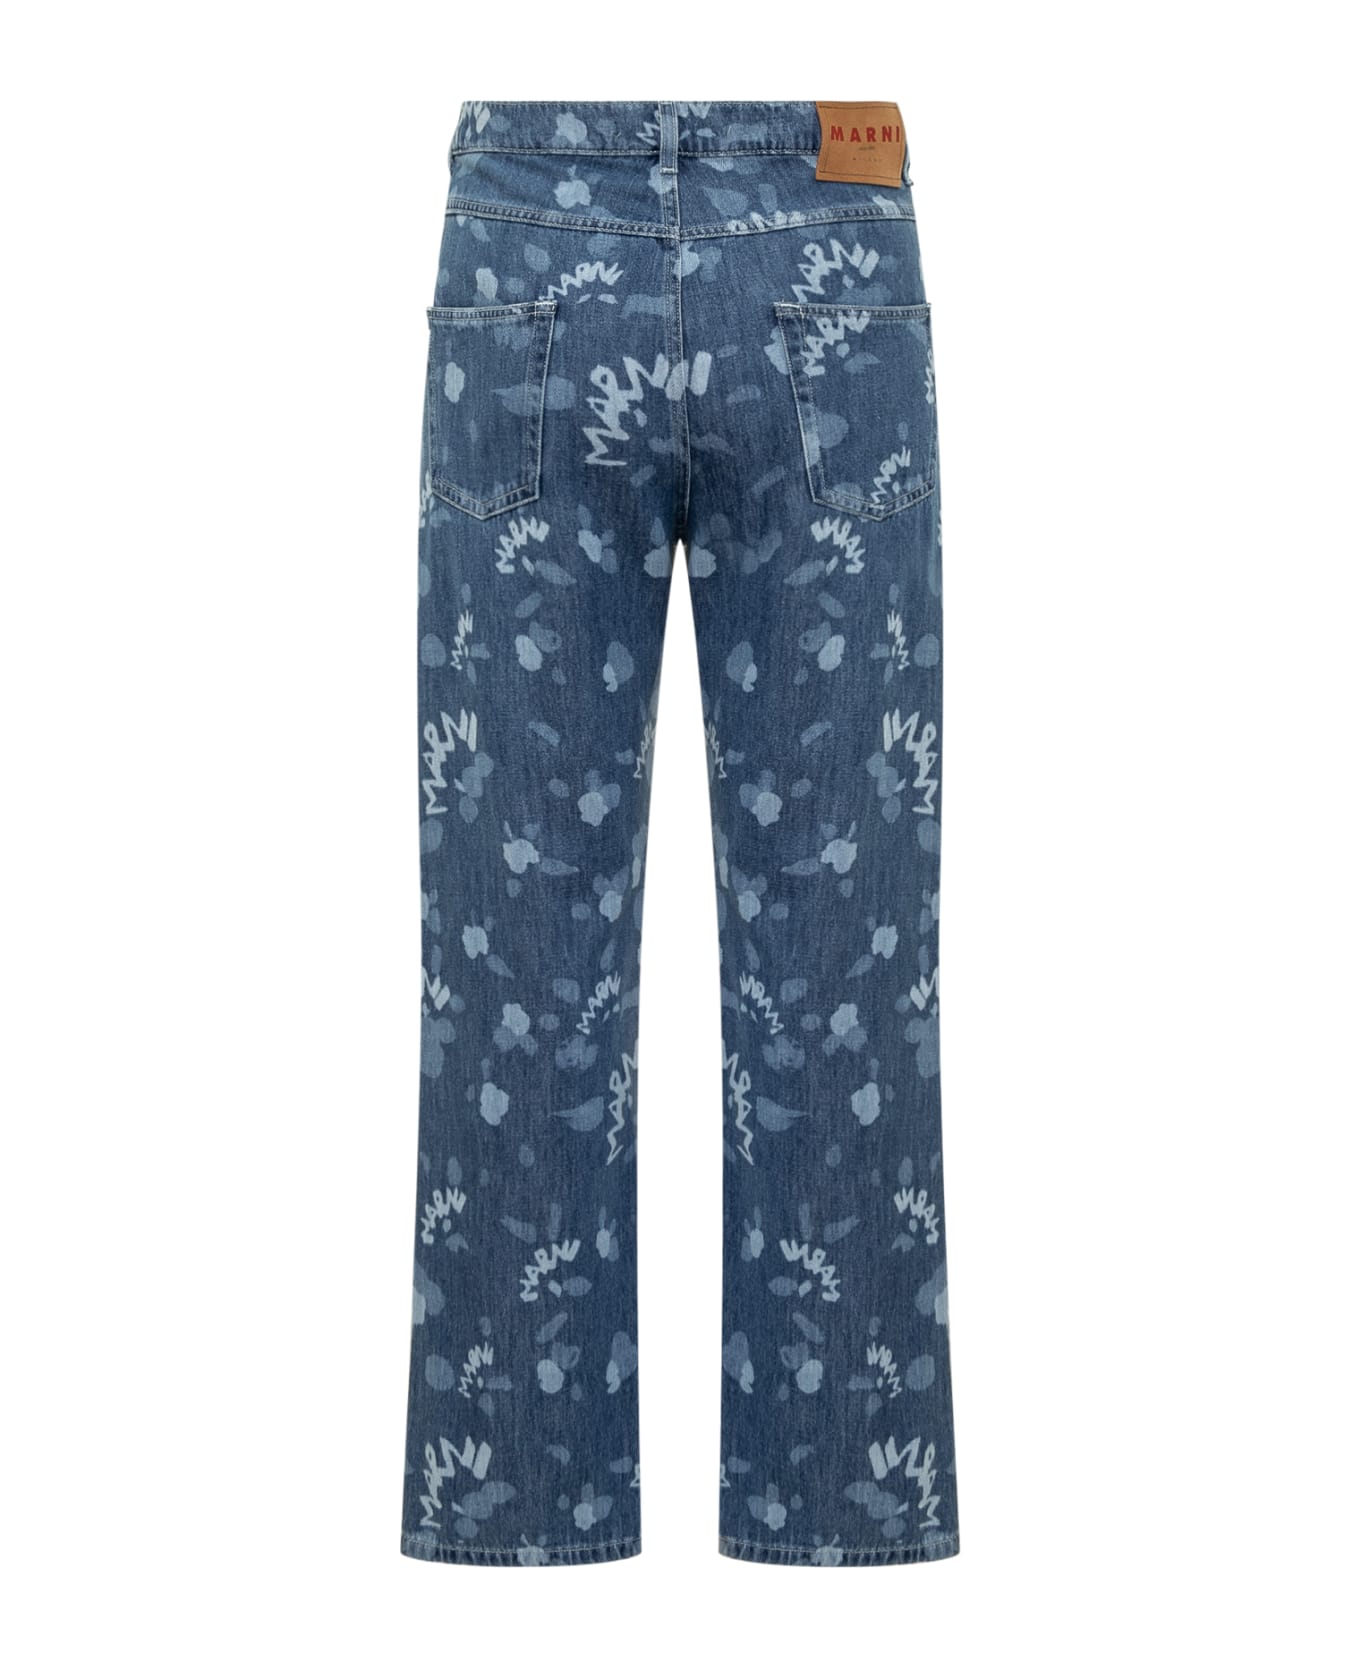 Marni Jeans With Marni Dripping Print - IRIS BLUE デニム